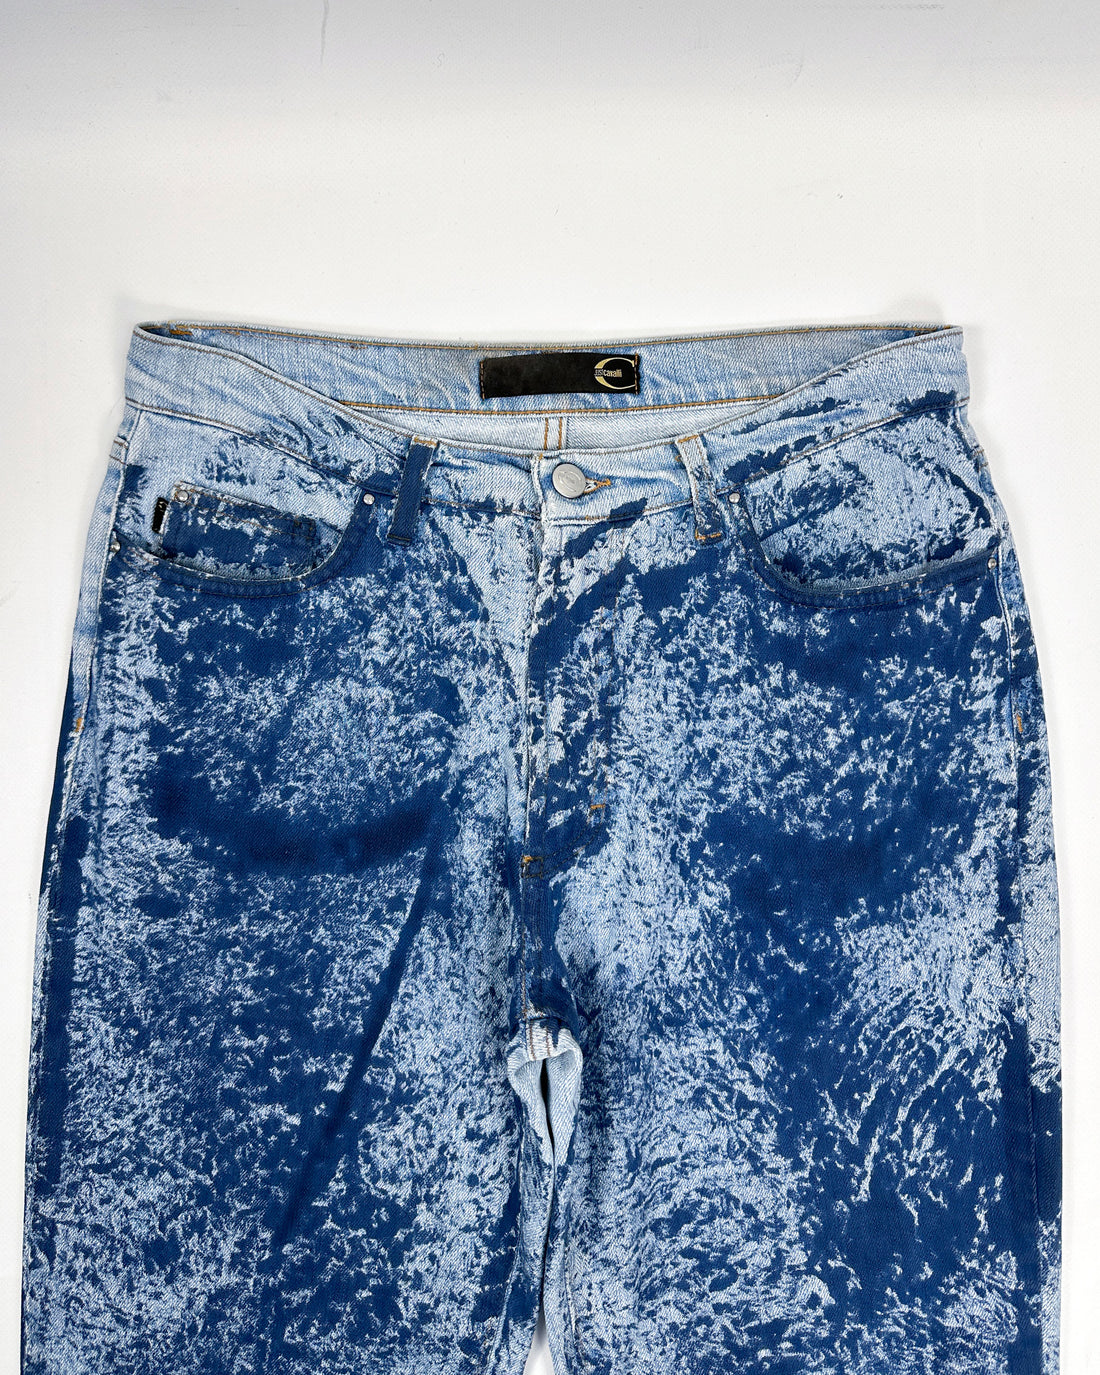 Roberto Cavalli Blue Splashed Denim Pants 2000's